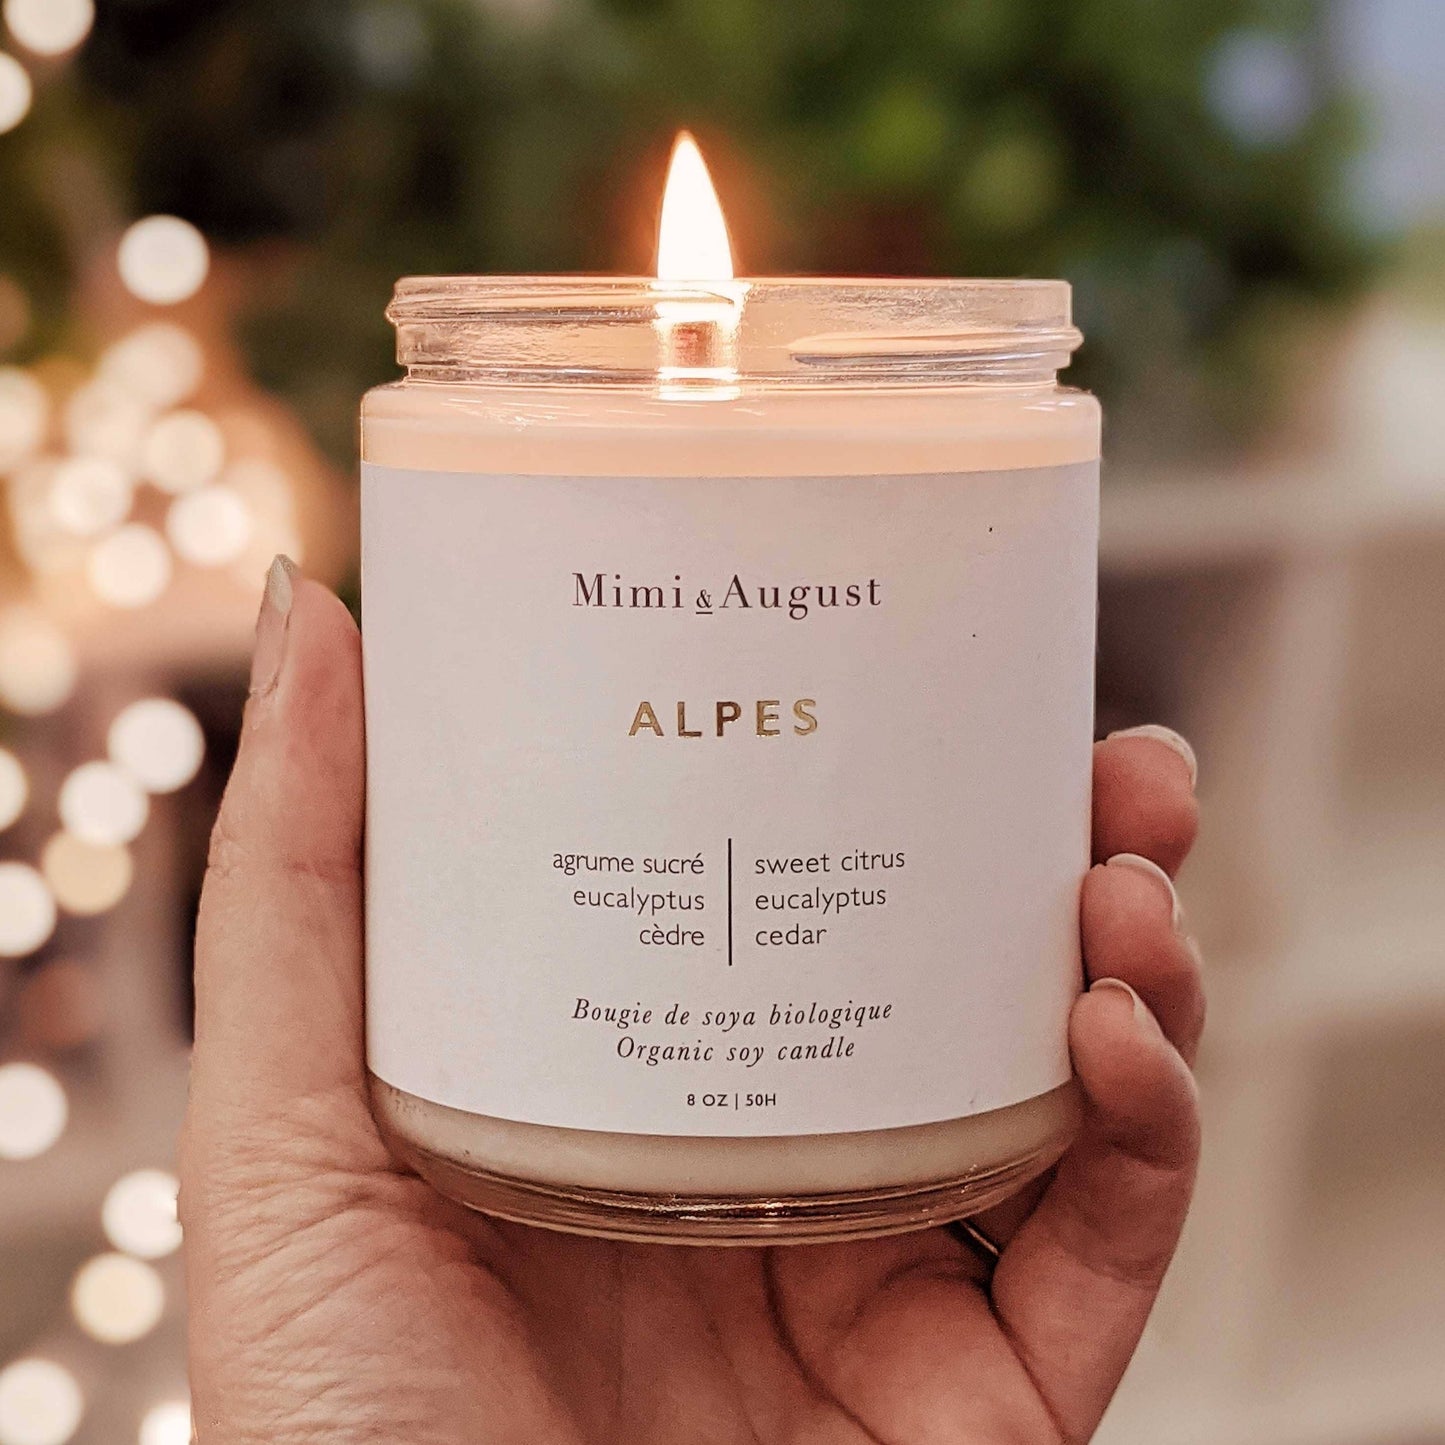 Alpes Minimal Organic Soy Candle, 8 oz